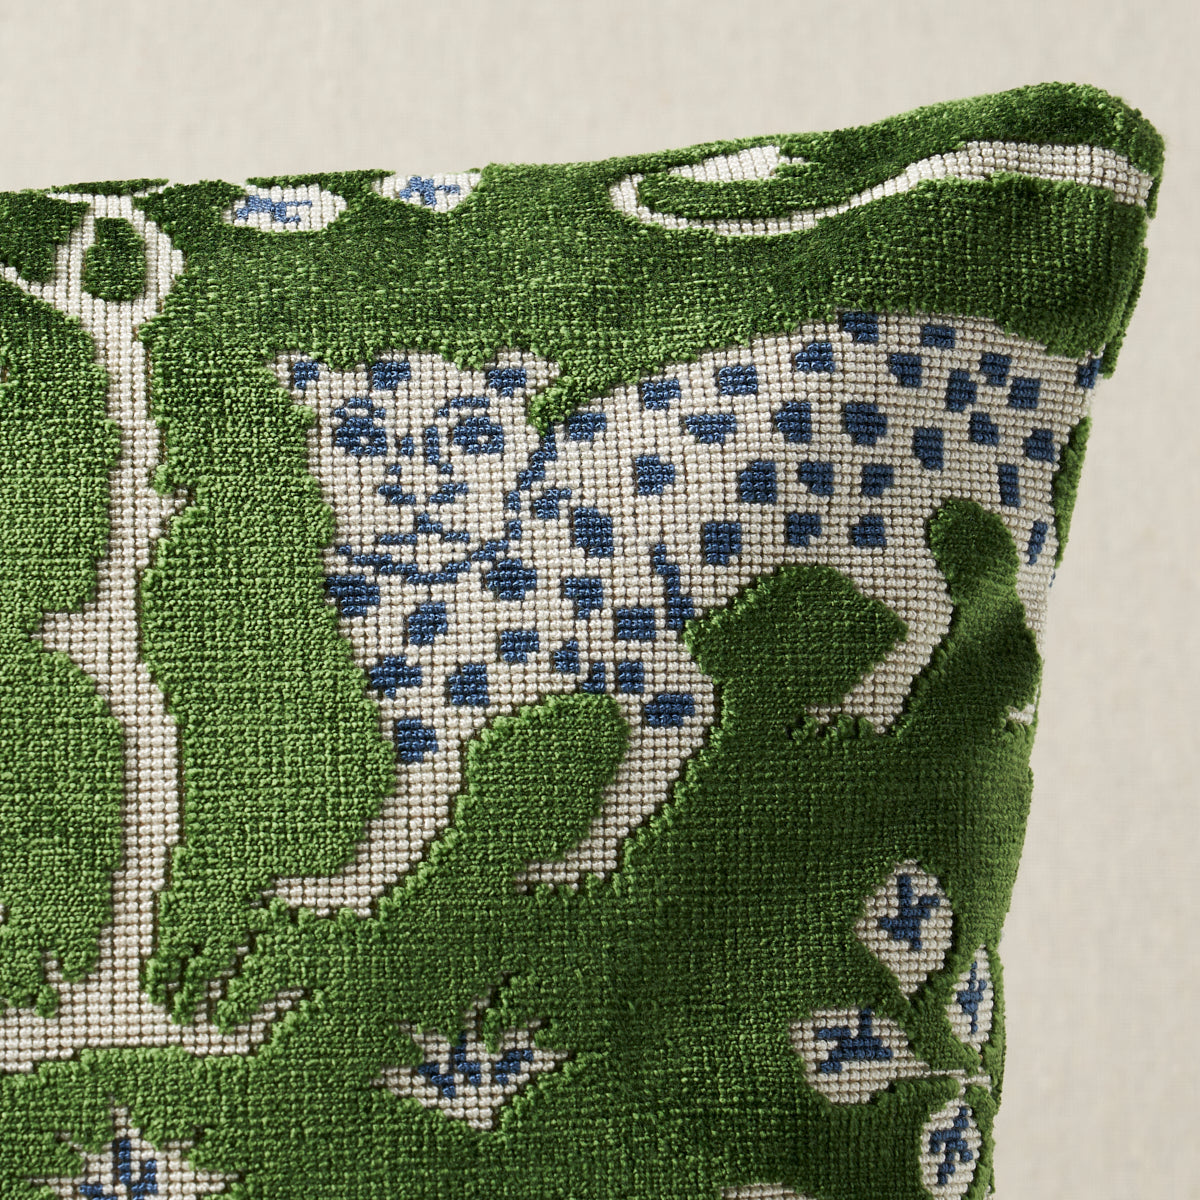 Woodland Leopard Velvet Pillow | Emerald